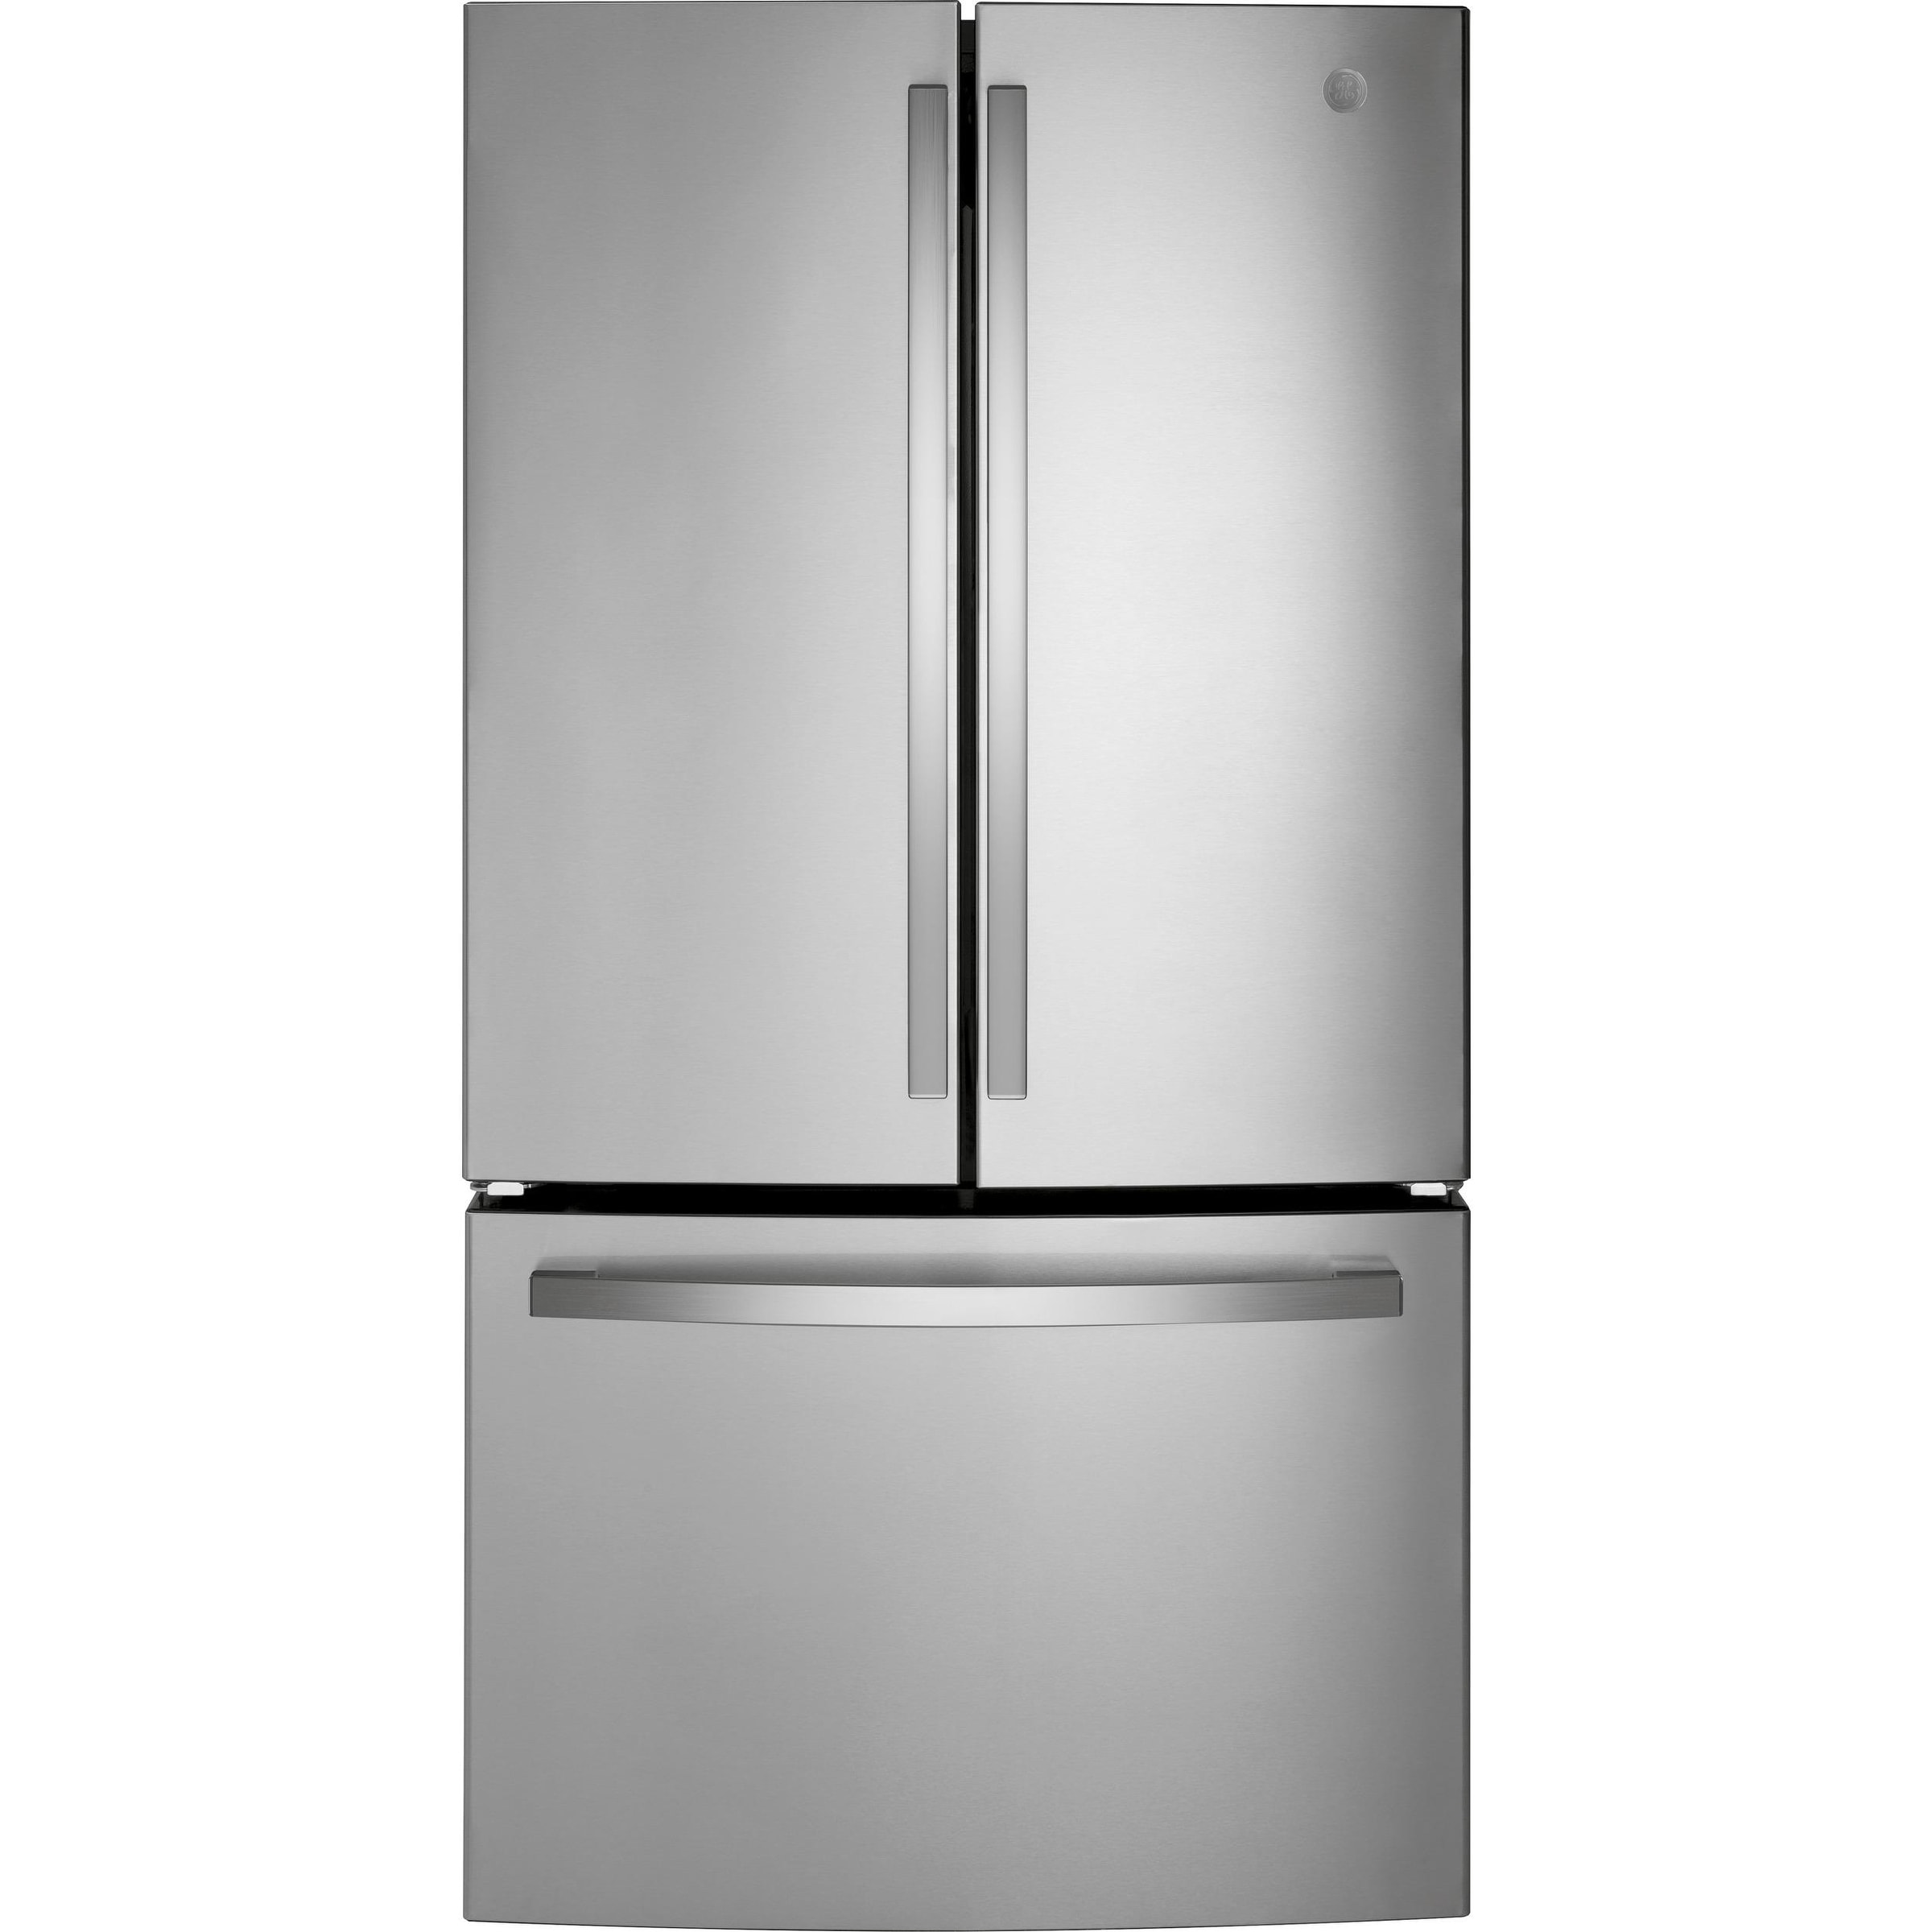 GE Appliances GE ENERGY STAR 27.0 Cu. Ft. Fingerprint Resistant French-Door Refrigerator Option 2